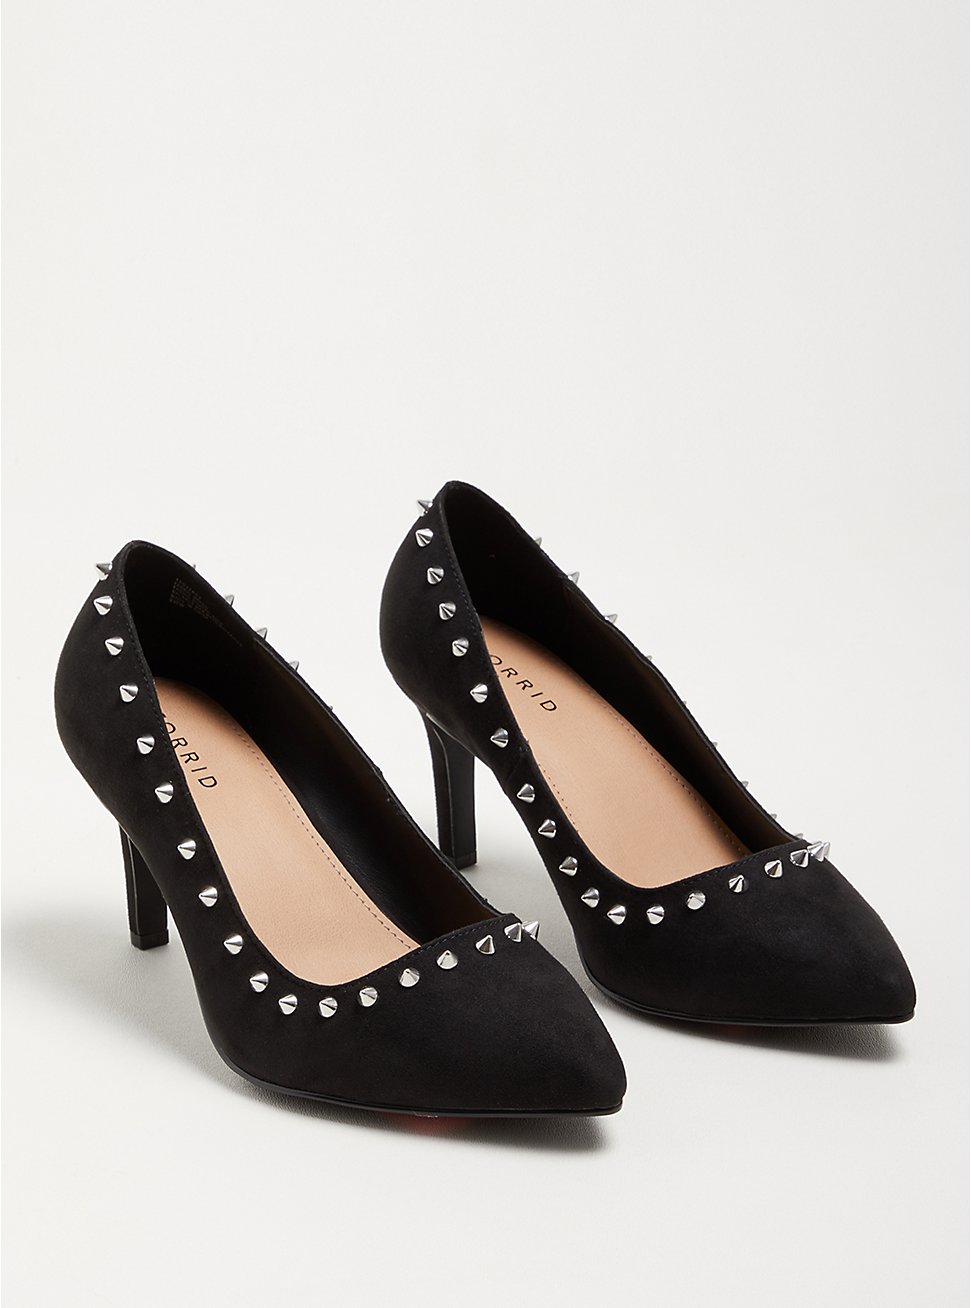 Plus Size Allover Spiked Heel Shoe - Faux Suede Black (WW), BLACK, hi-res